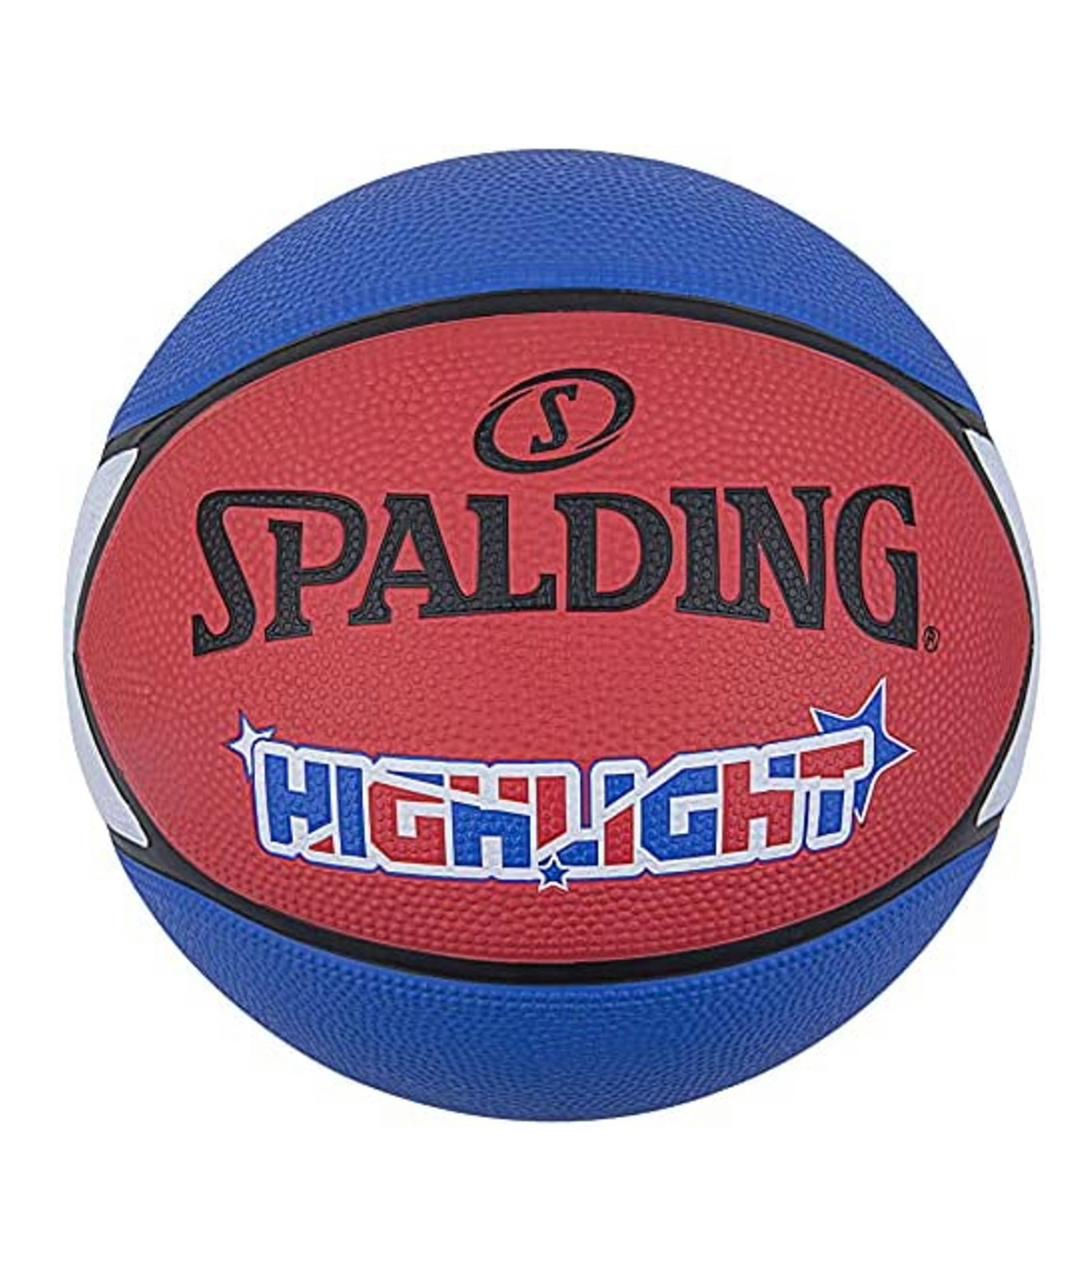 Spalding Highligtht Basketball Orange & Blue